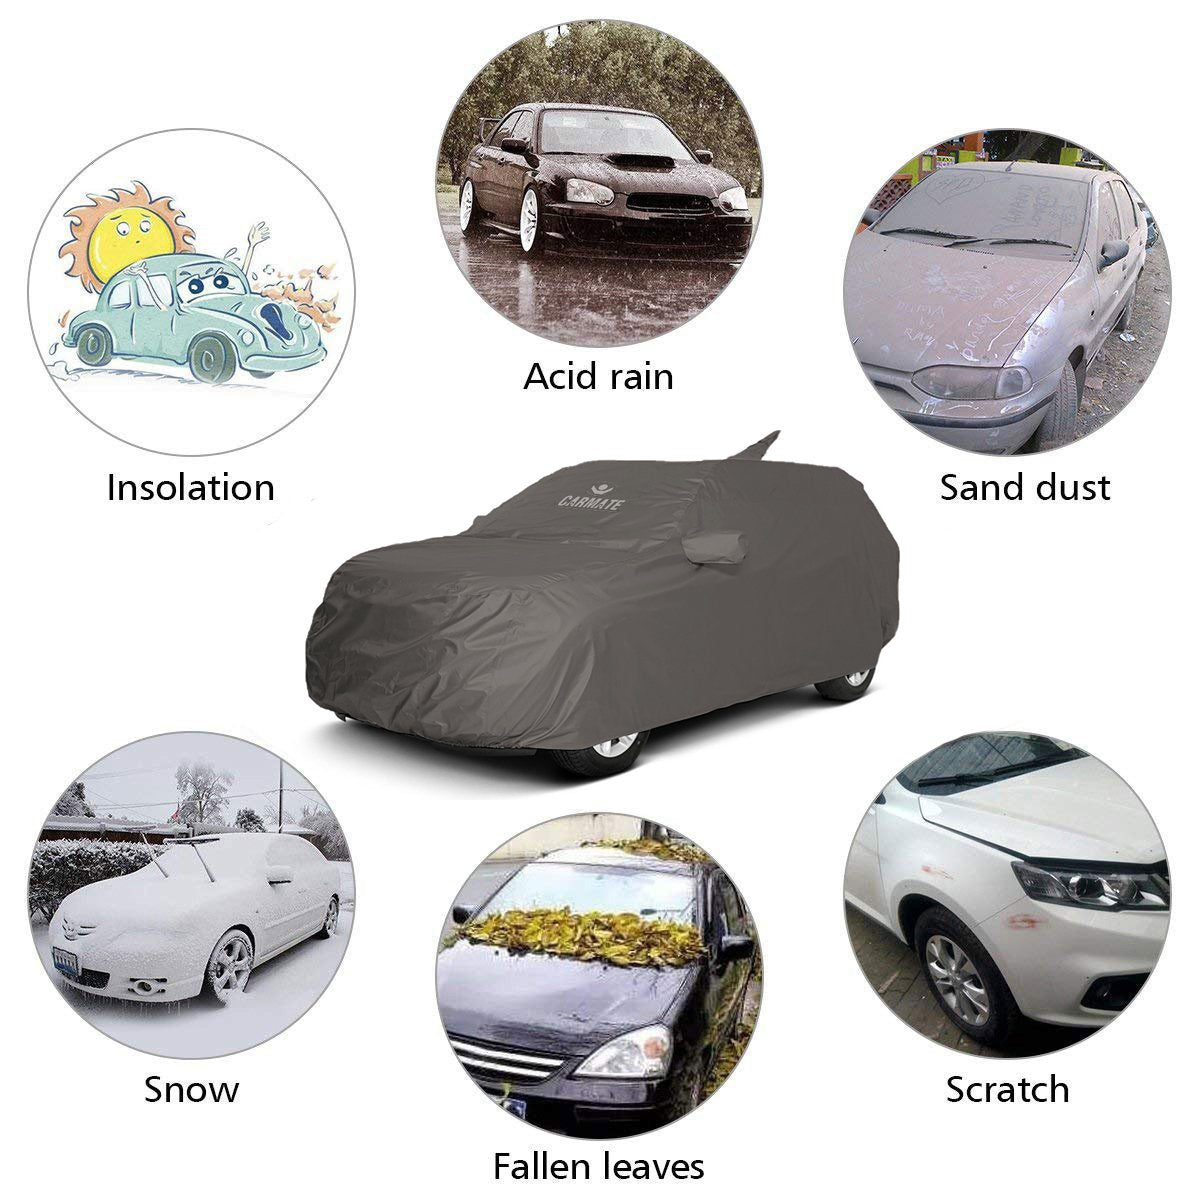 Carmate Car Body Cover 100% Waterproof Pride (Grey) for Mercedes Benz - S350 - CARMATE®